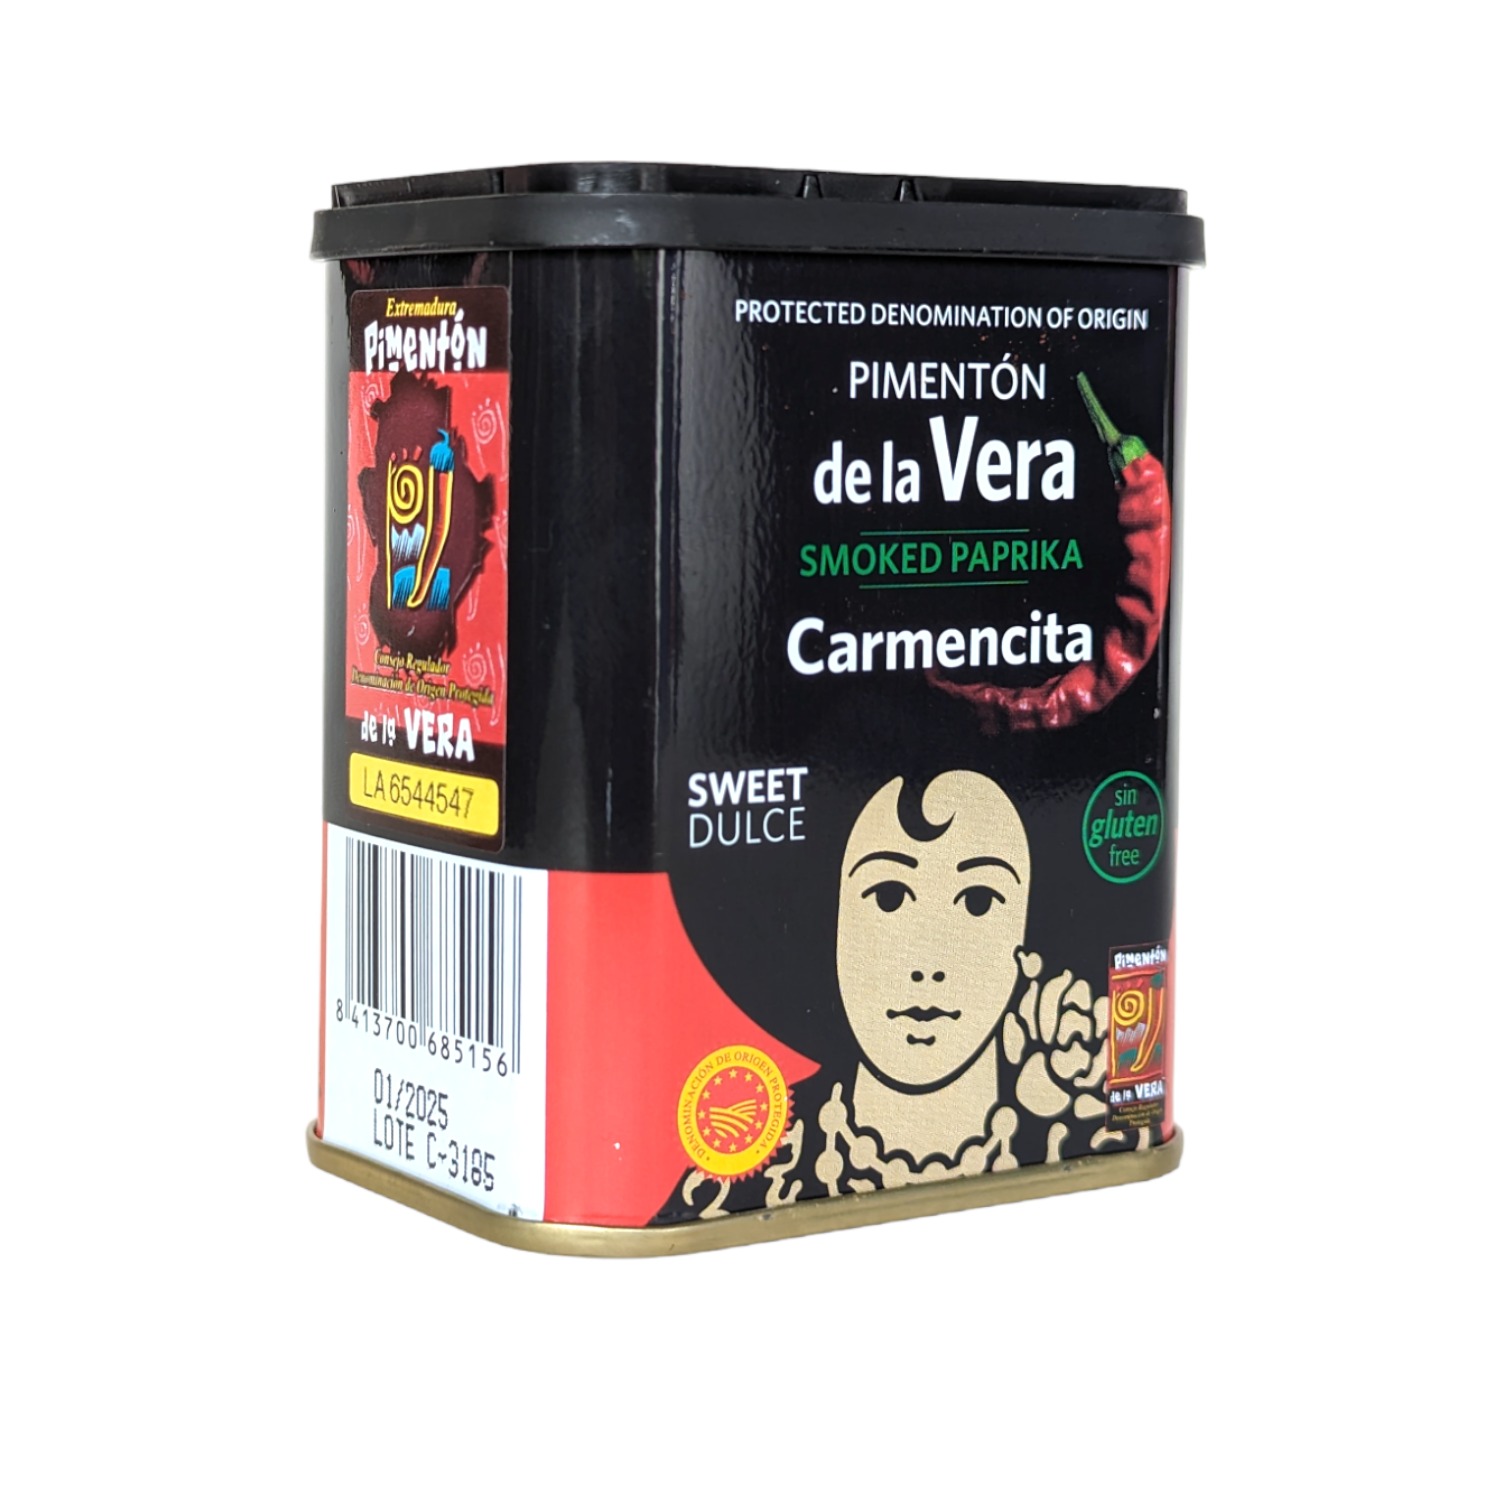 Pimentn de la Vera (Smoked Sweet Paprika)